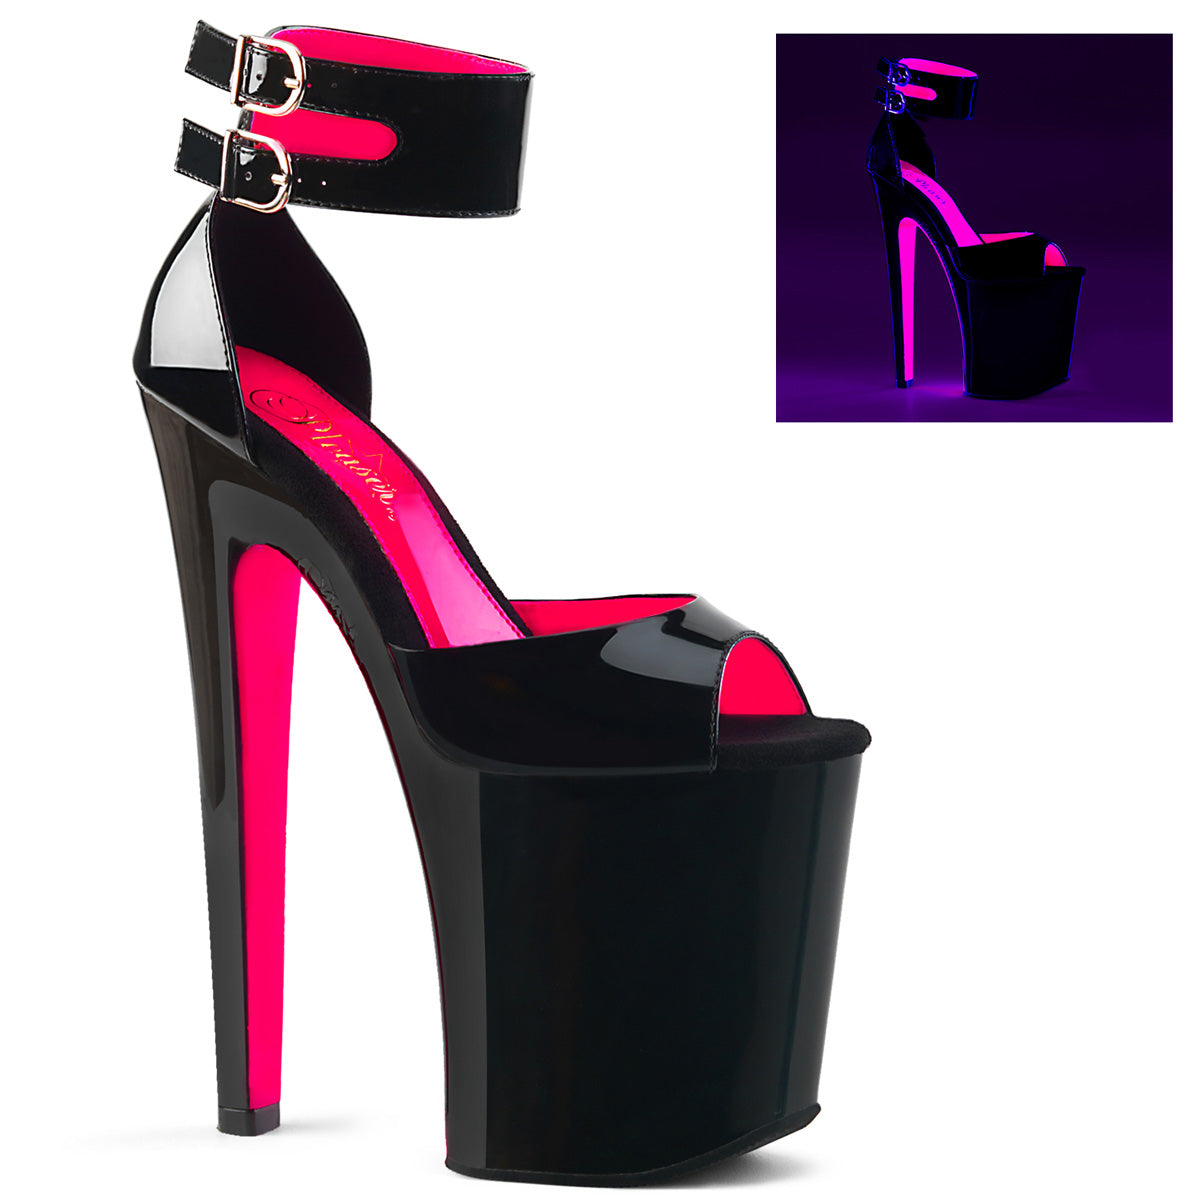 XTREME-875TT 8" Heel Black Pole Dancer Platform Shoes Shoes